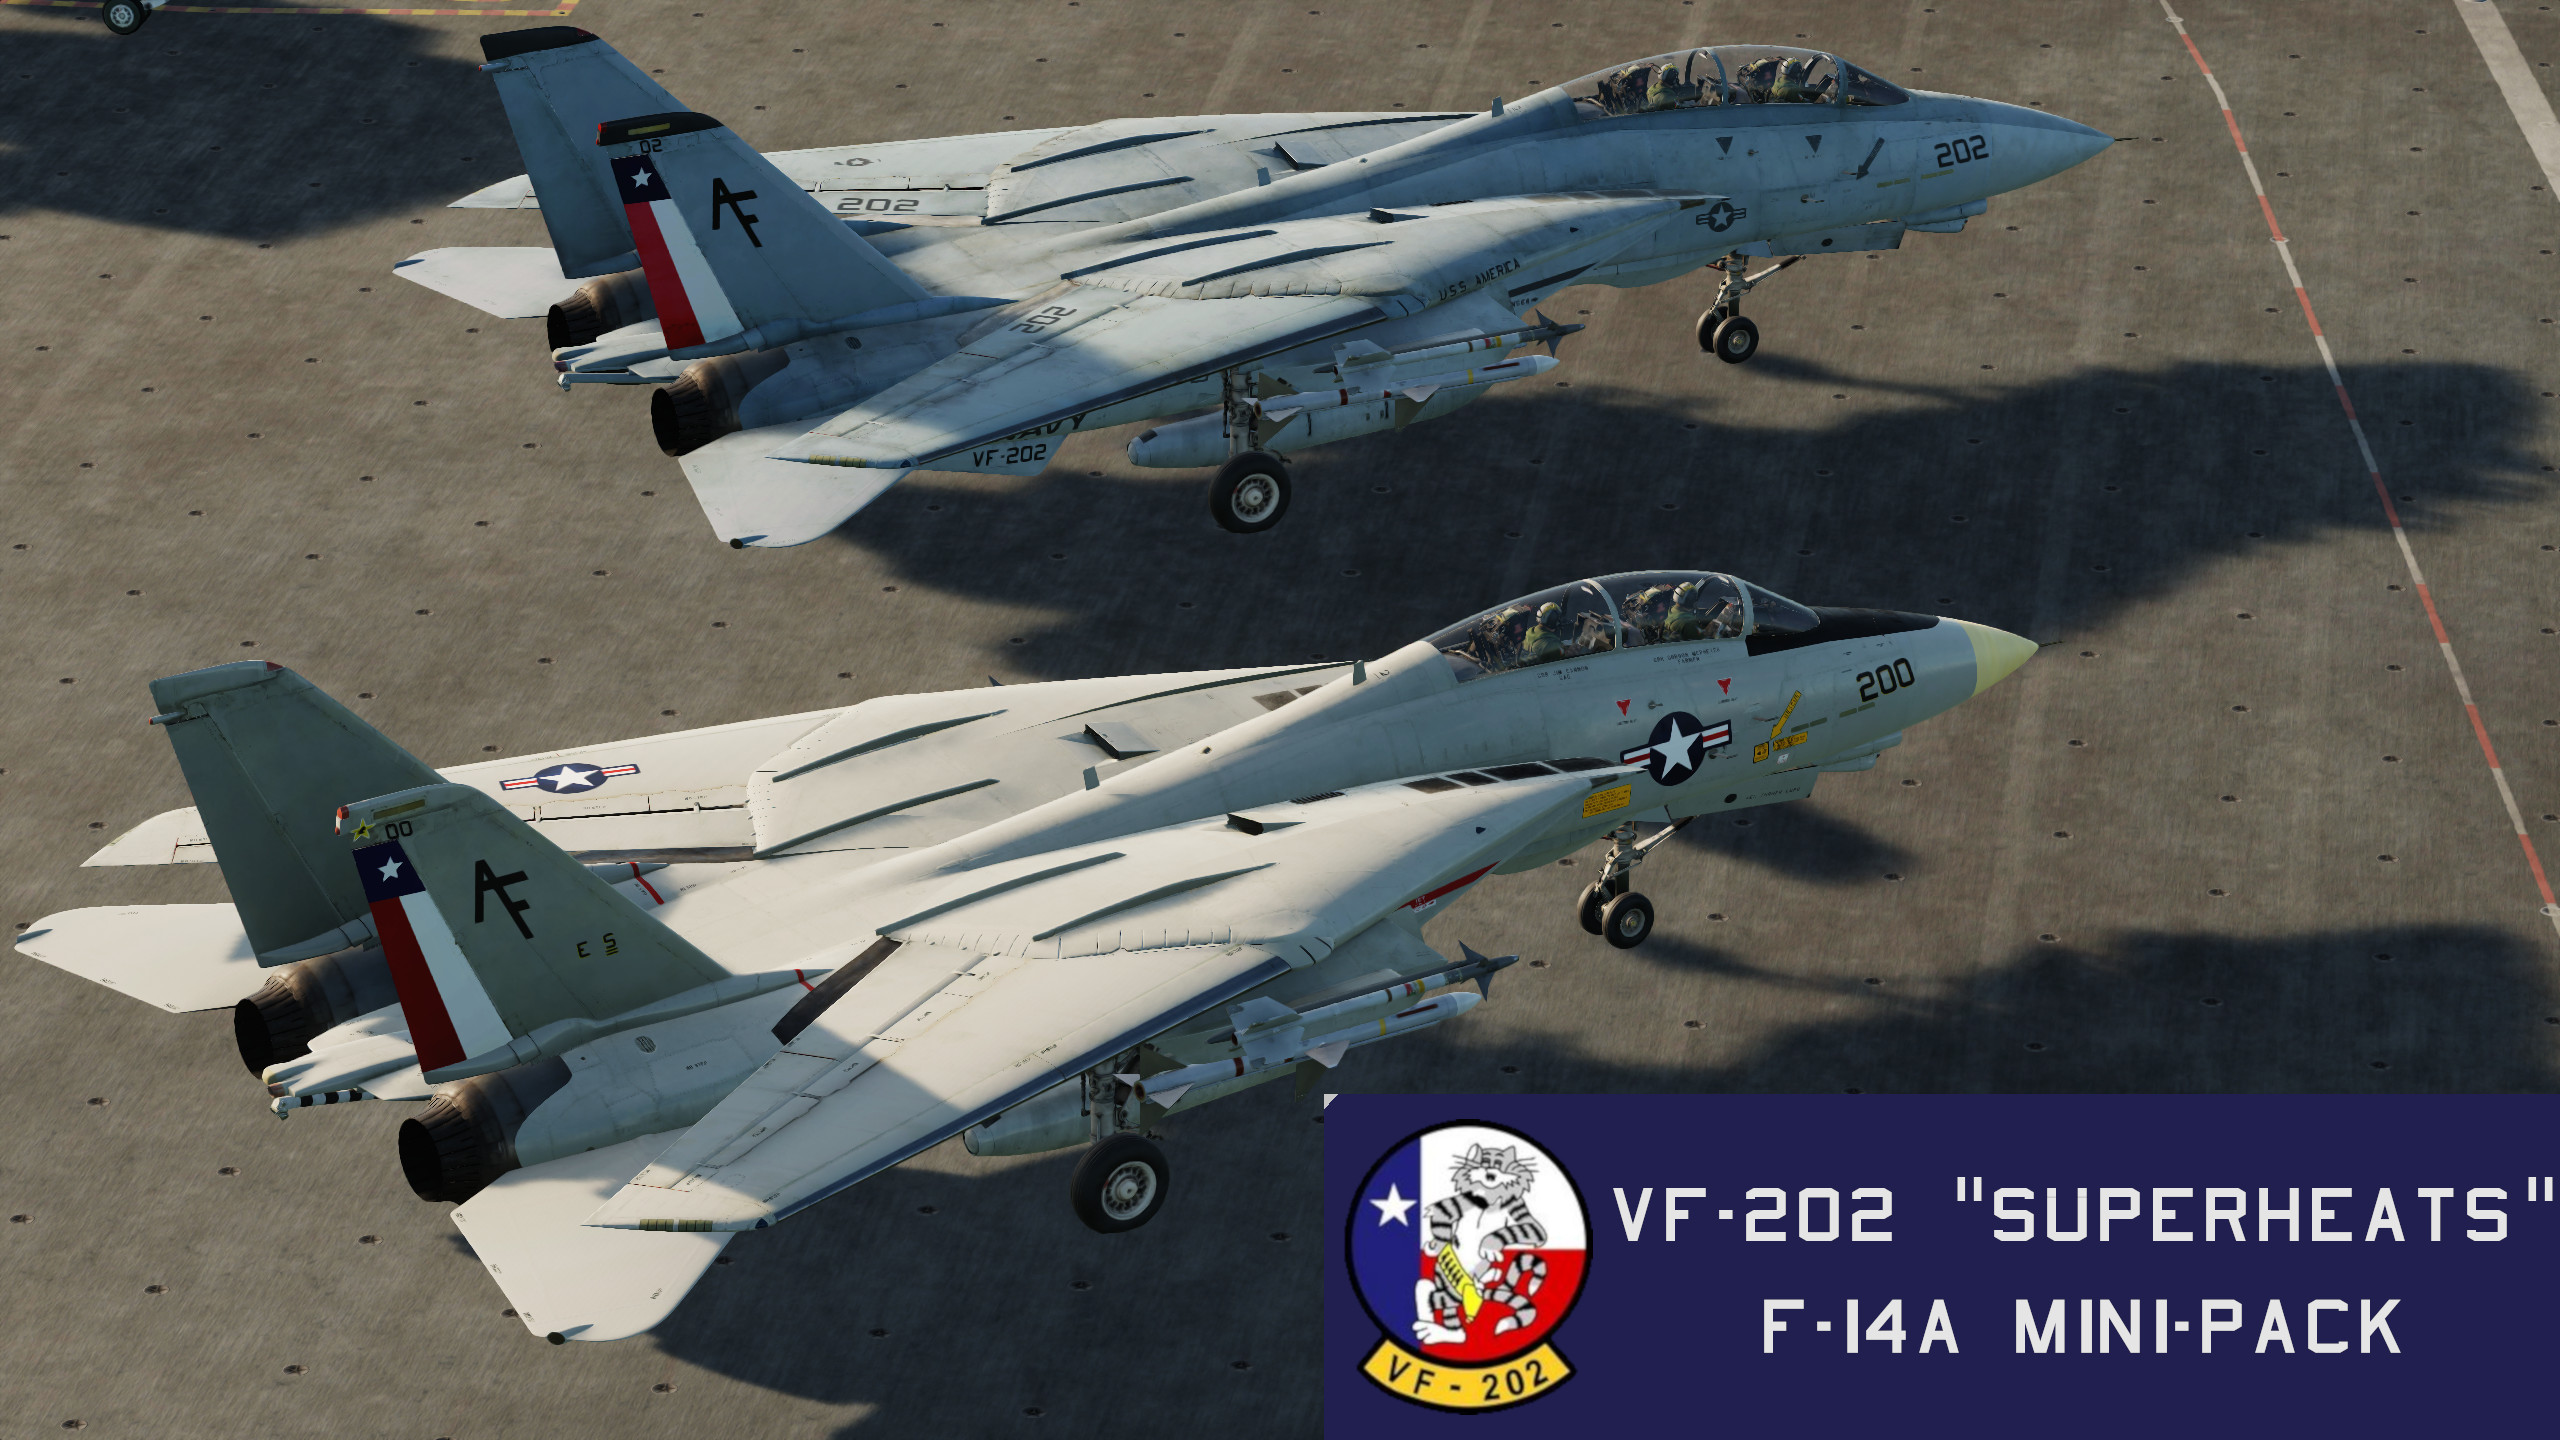 VF-202 "SUPERHEATS" F-14A Mini-Pack